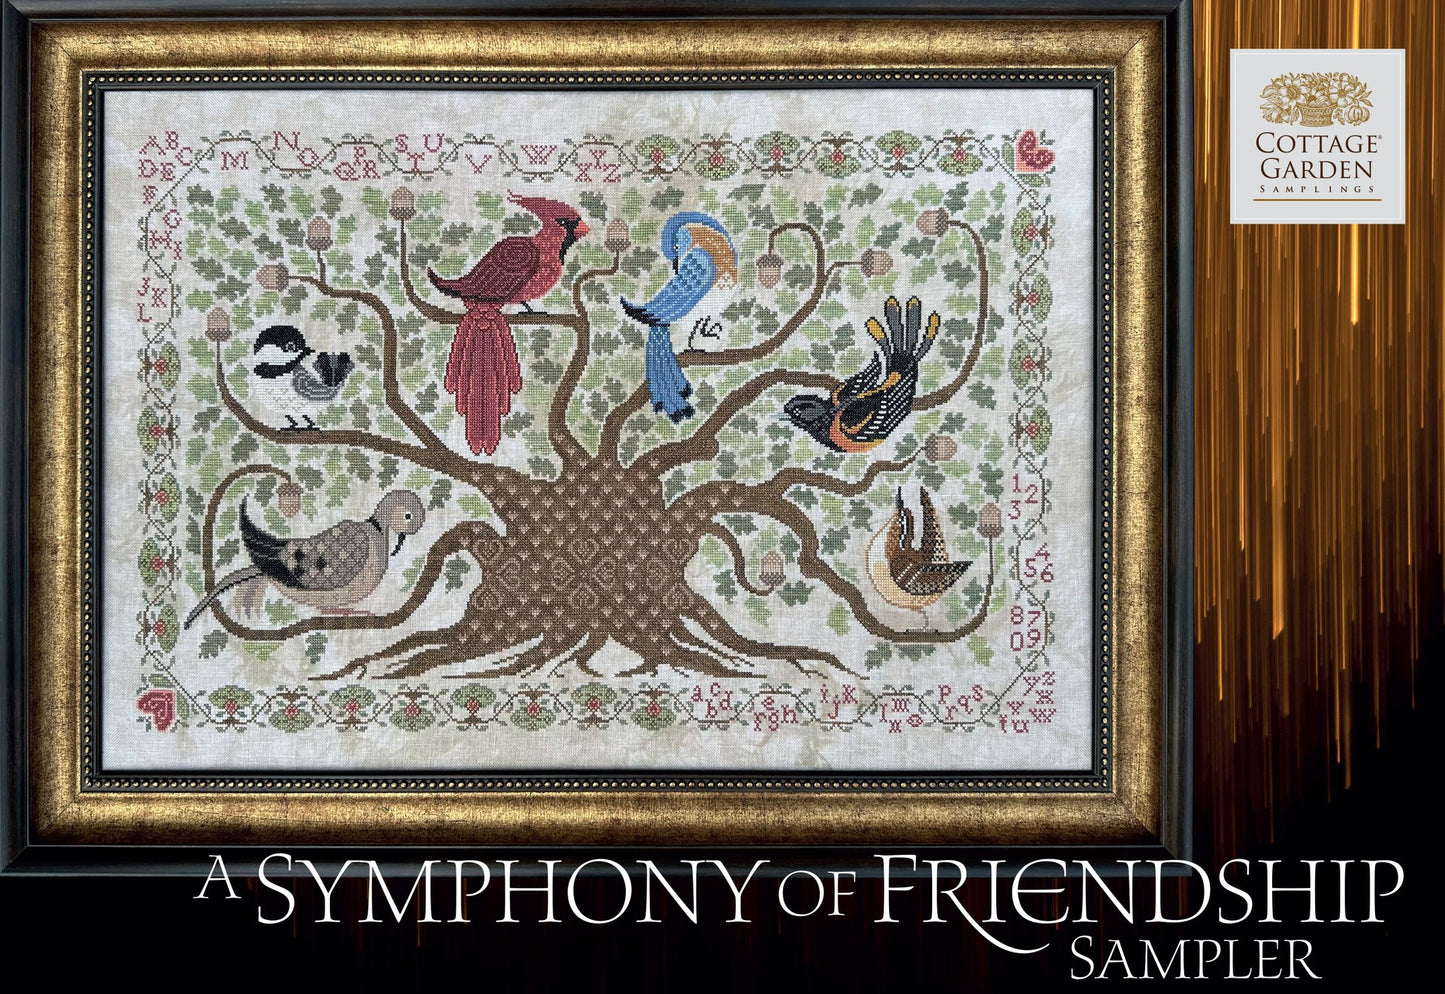 A Symphony of Friendship Sampler - Cross Stitch Chart By Cottage Garden Samplings